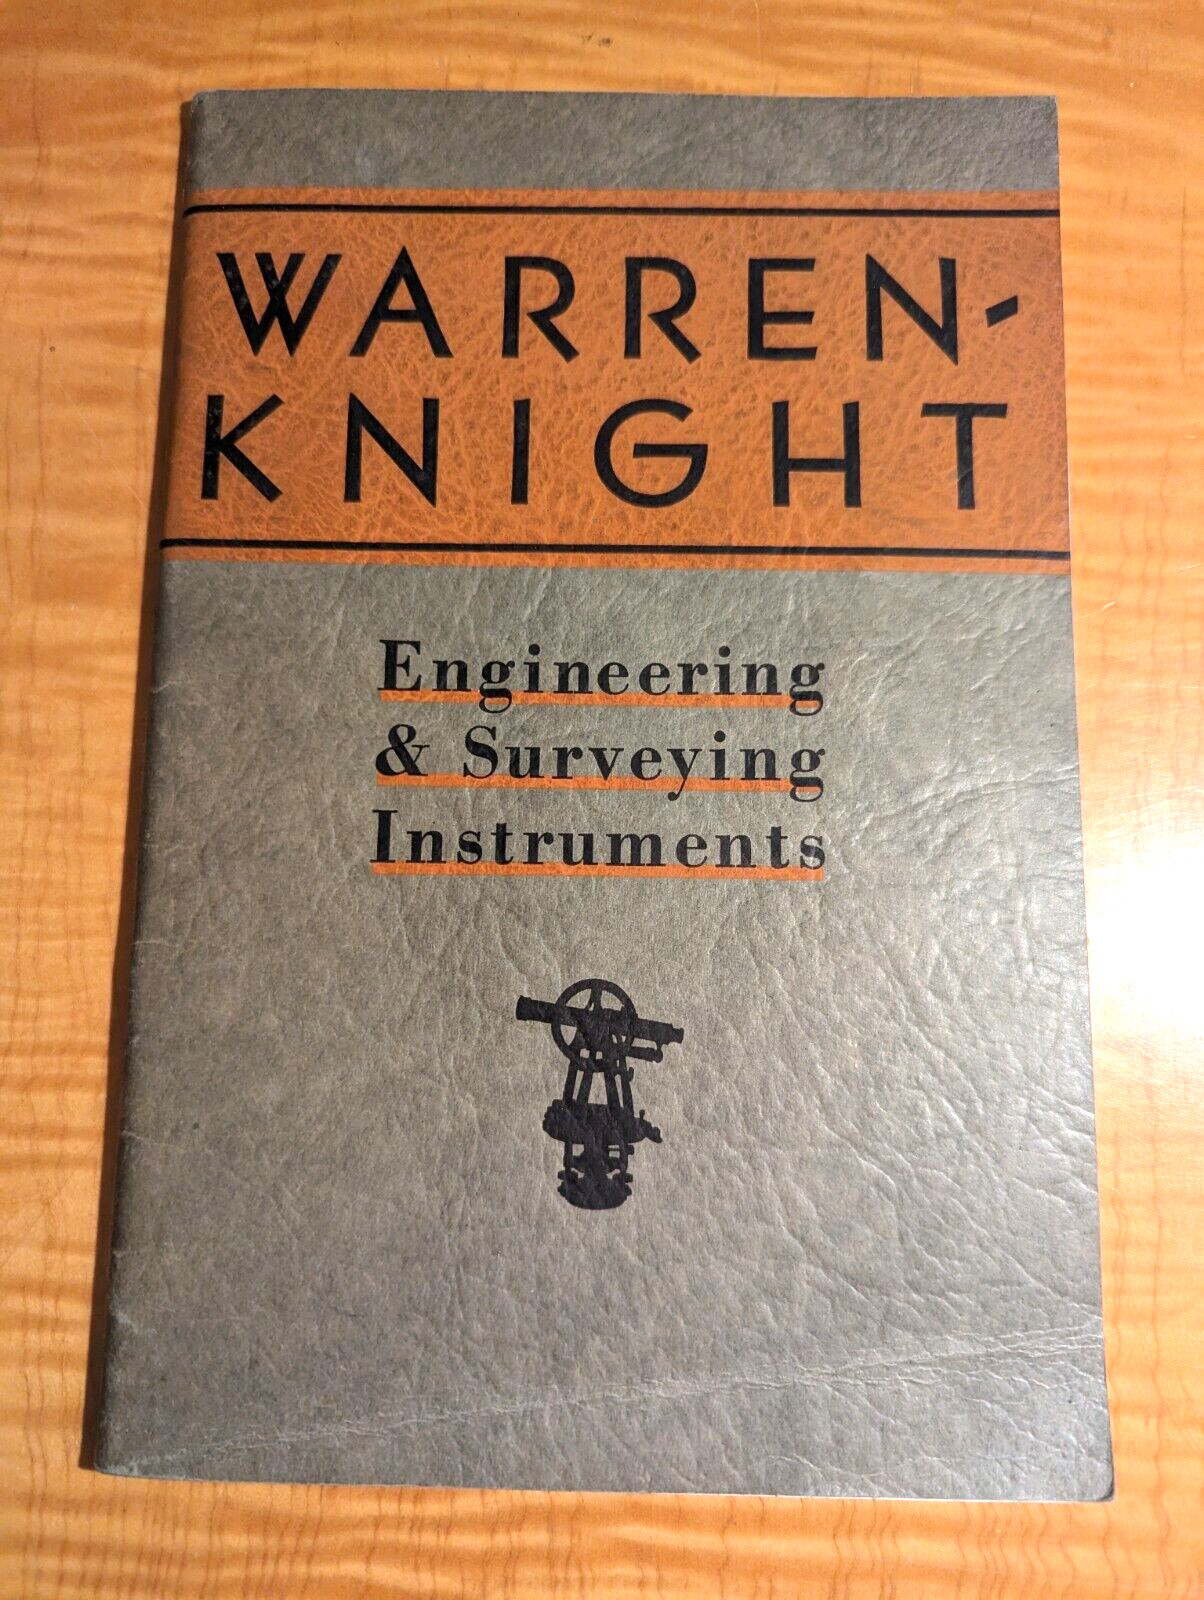 1931 Warren Knight Engineering Surveying Instruments Transits Catalog $29.95